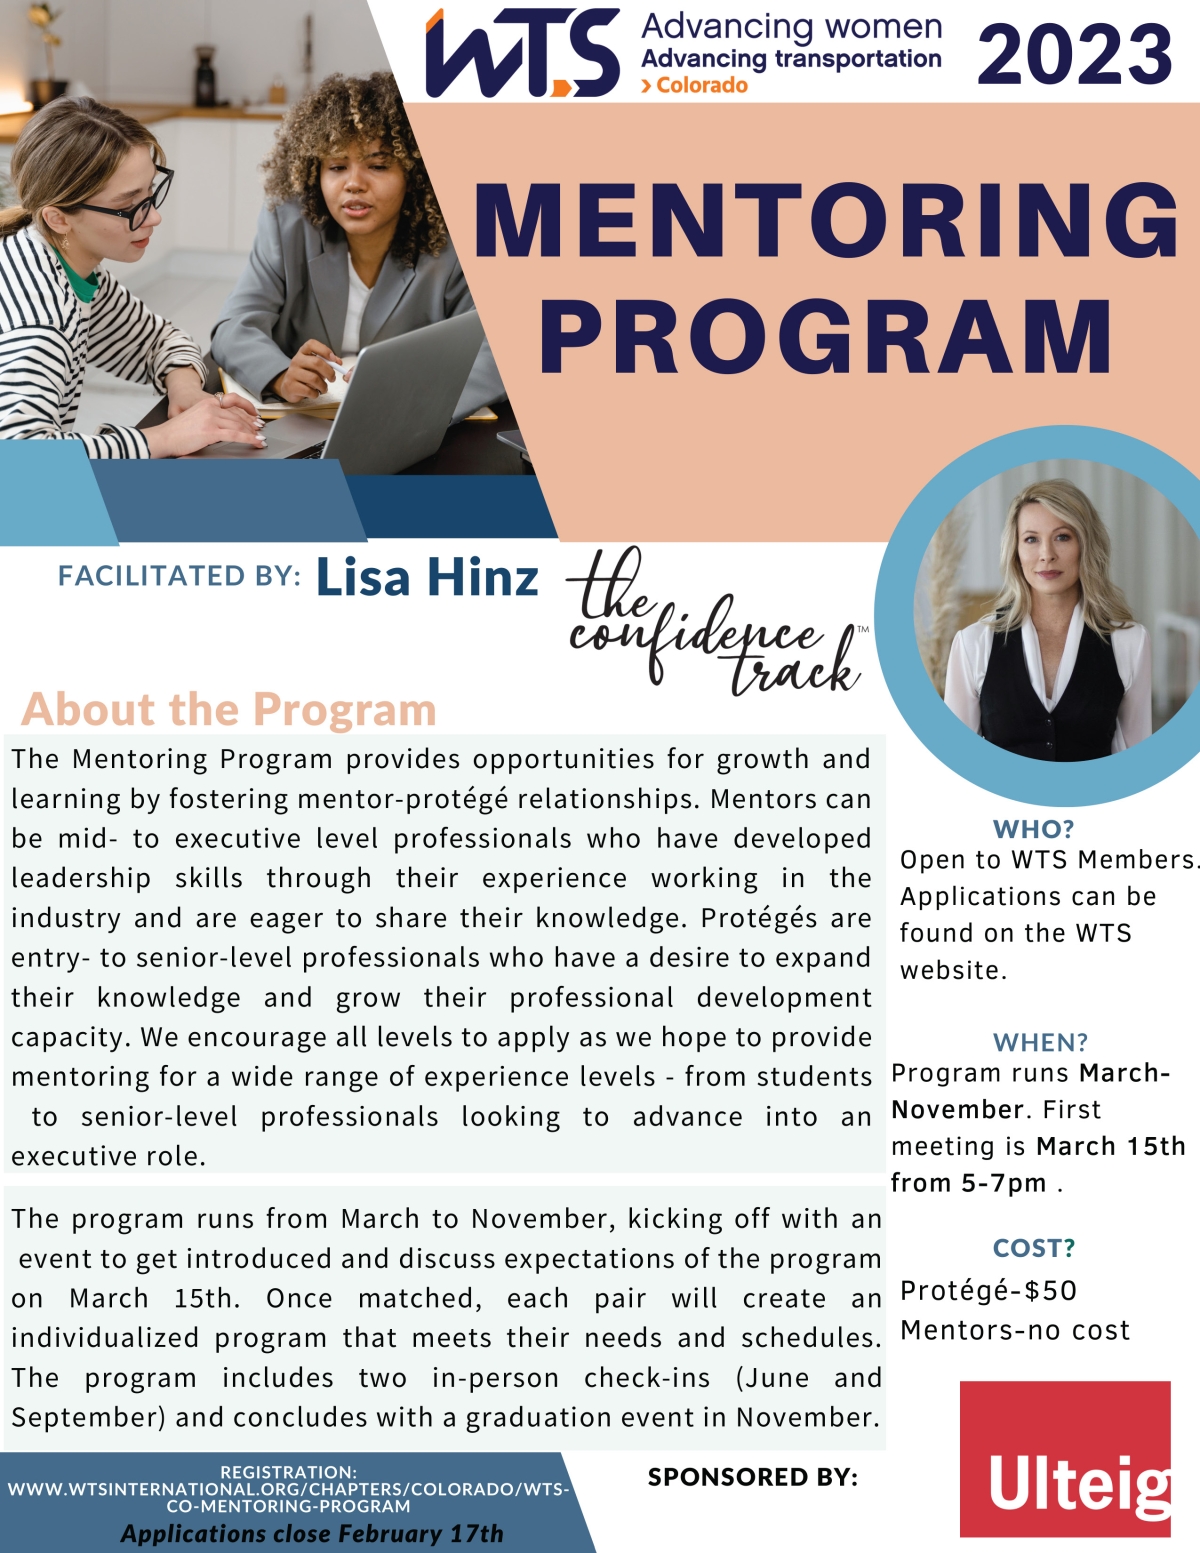 WTS CO 2023 mentorship program flyer